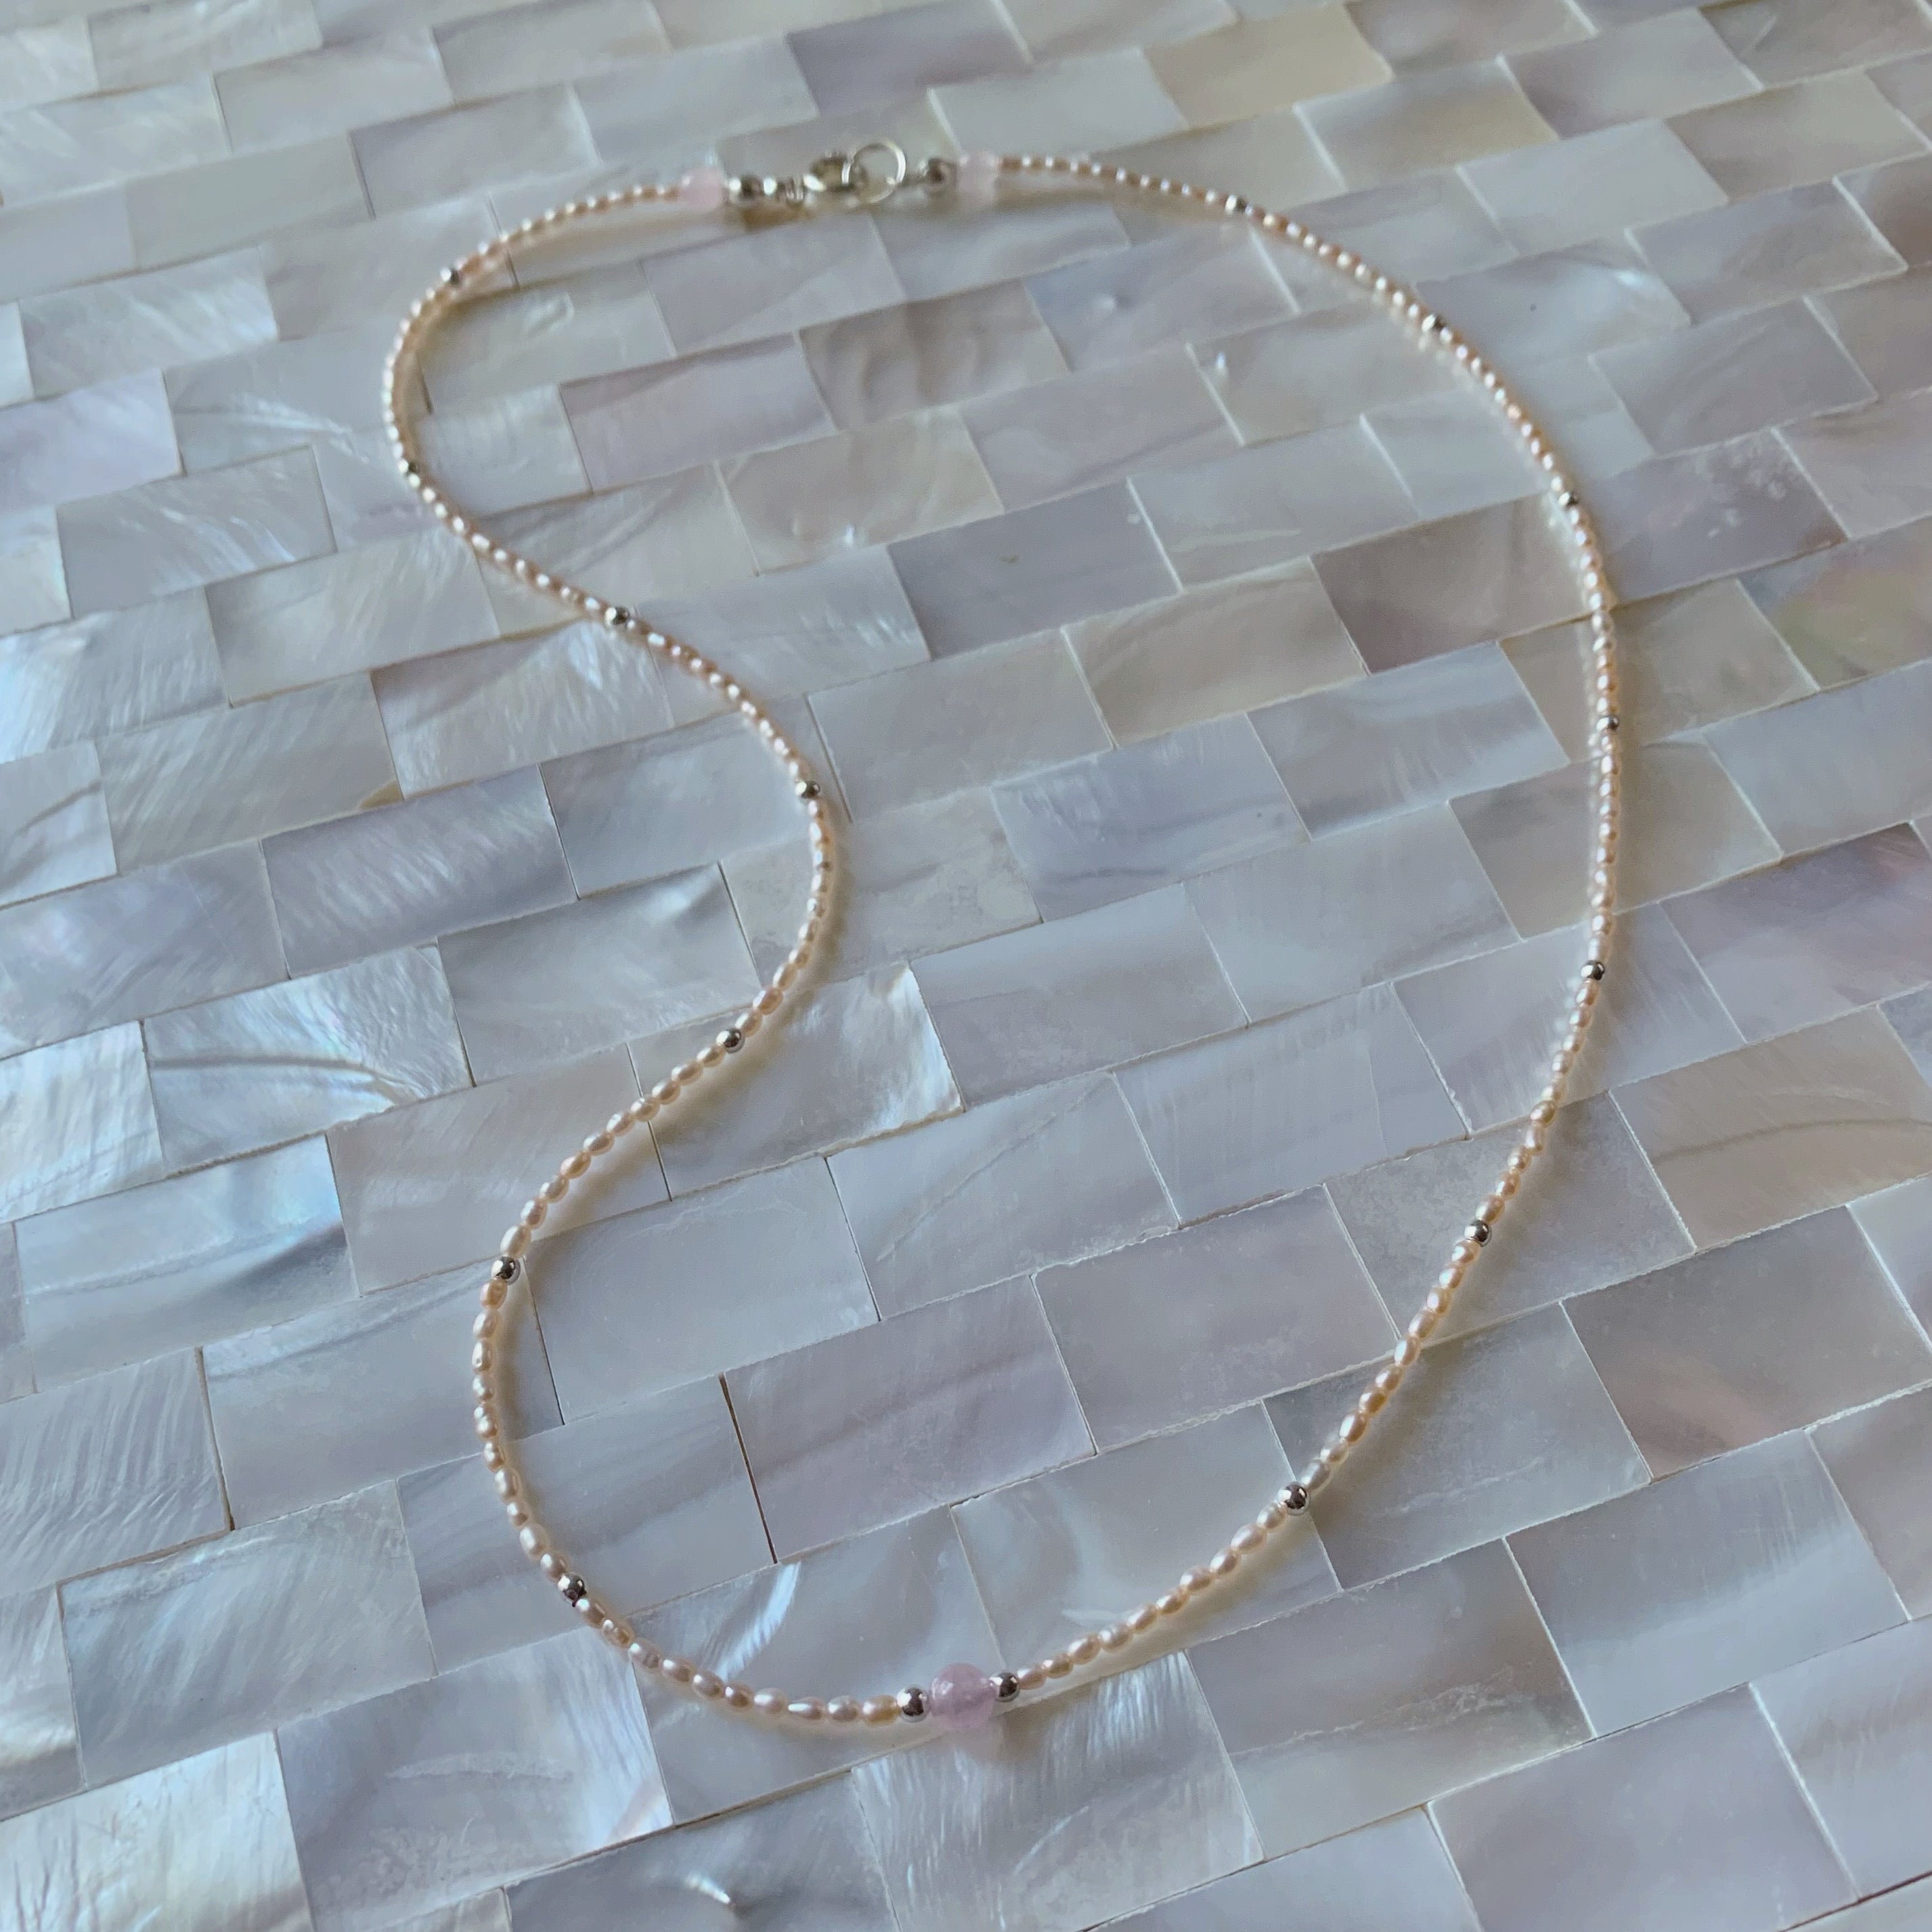 Freshwater Pearl & Rose Quartz Necklace